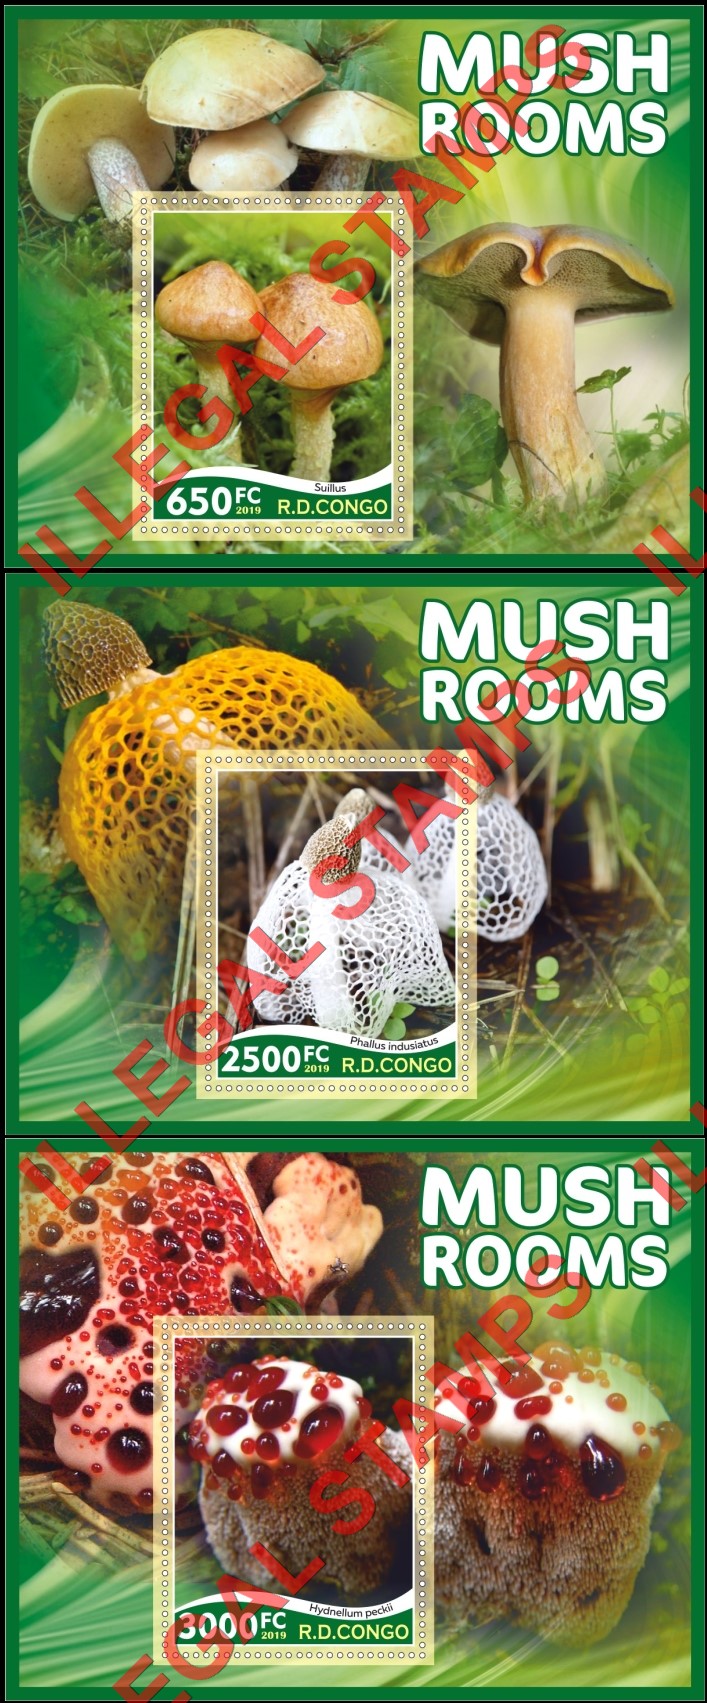 Congo Democratic Republic 2019 Mushrooms Illegal Stamp Souvenir Sheets of 1 (Part 2)